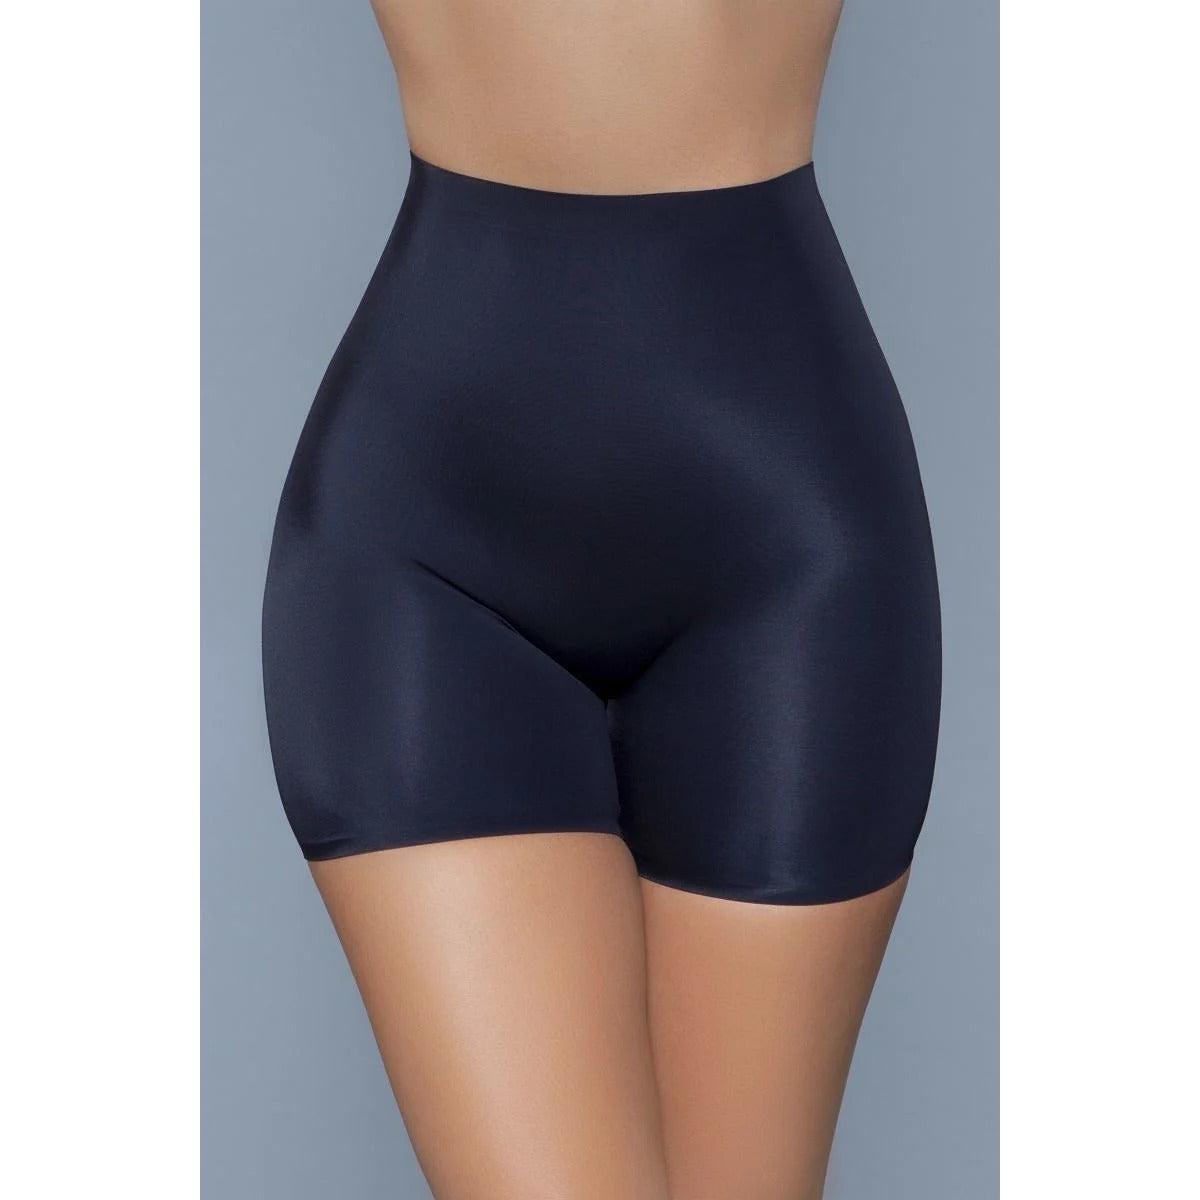 Black Seamless Mid-waist And Anti-chafing Slip Shorts-Underwear-NXTLVLNYC